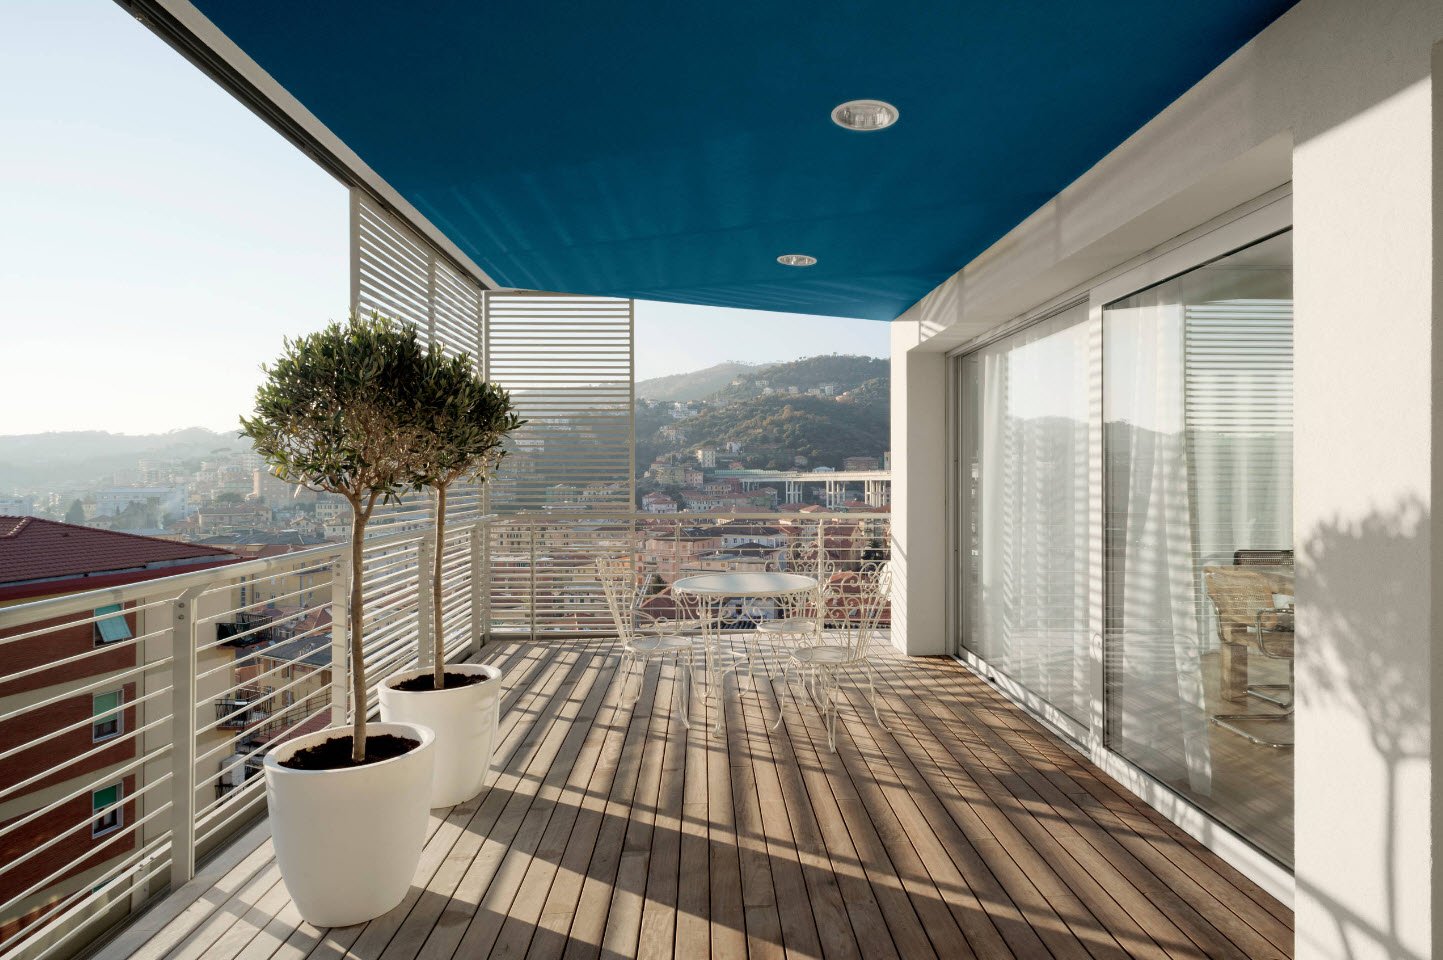 Balcony Ideas Pinterest Balcony Modern Furniture